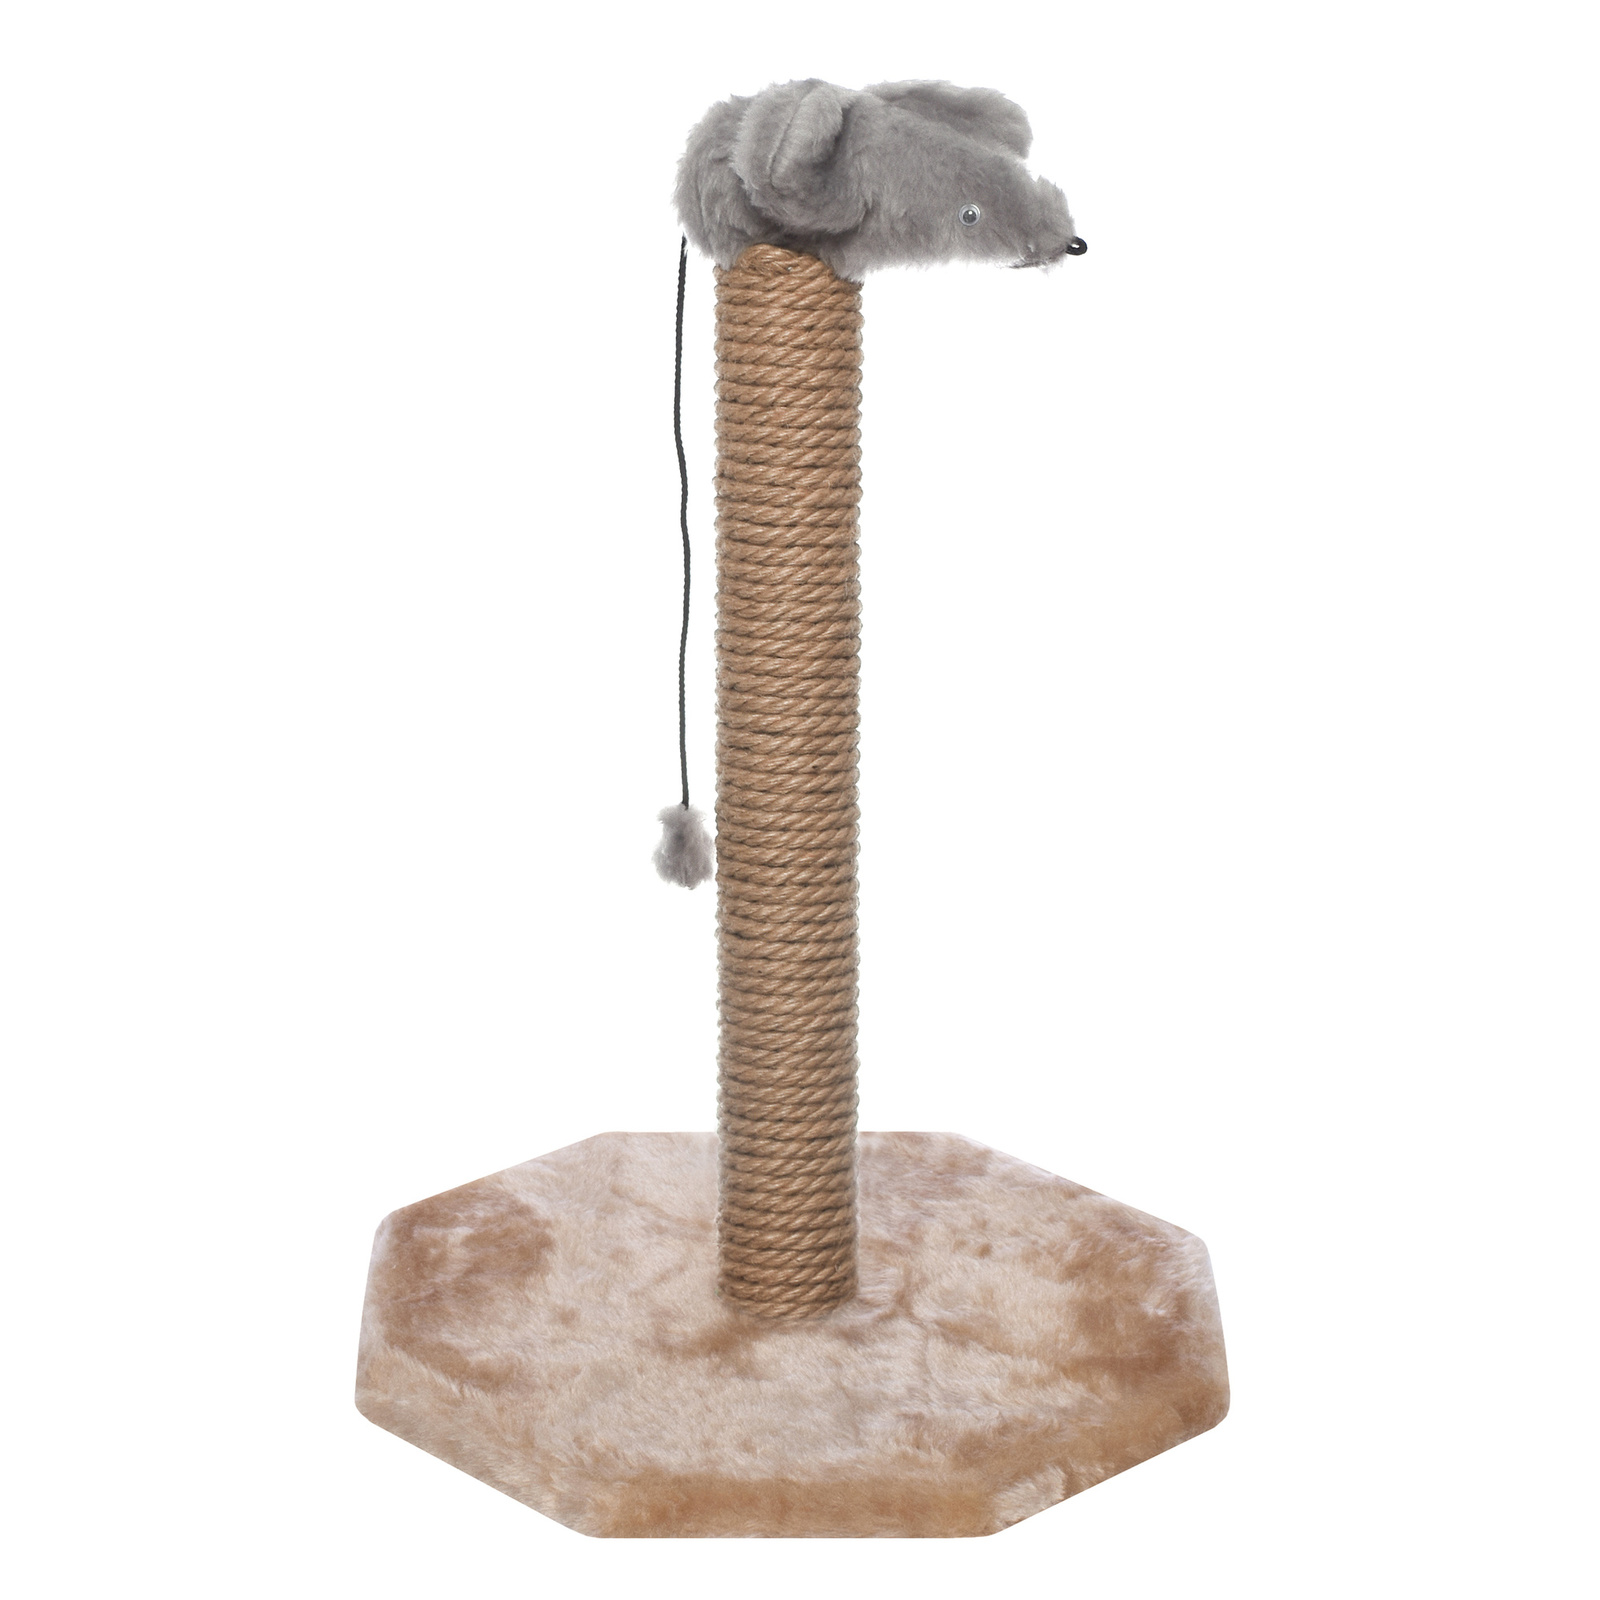 Yami-Yami Yami-Yami когтеточка Мышка на столбике, джут (1,78 кг) yami yami yami yami когтеточка зонтик с помпоном джут 2 61 кг